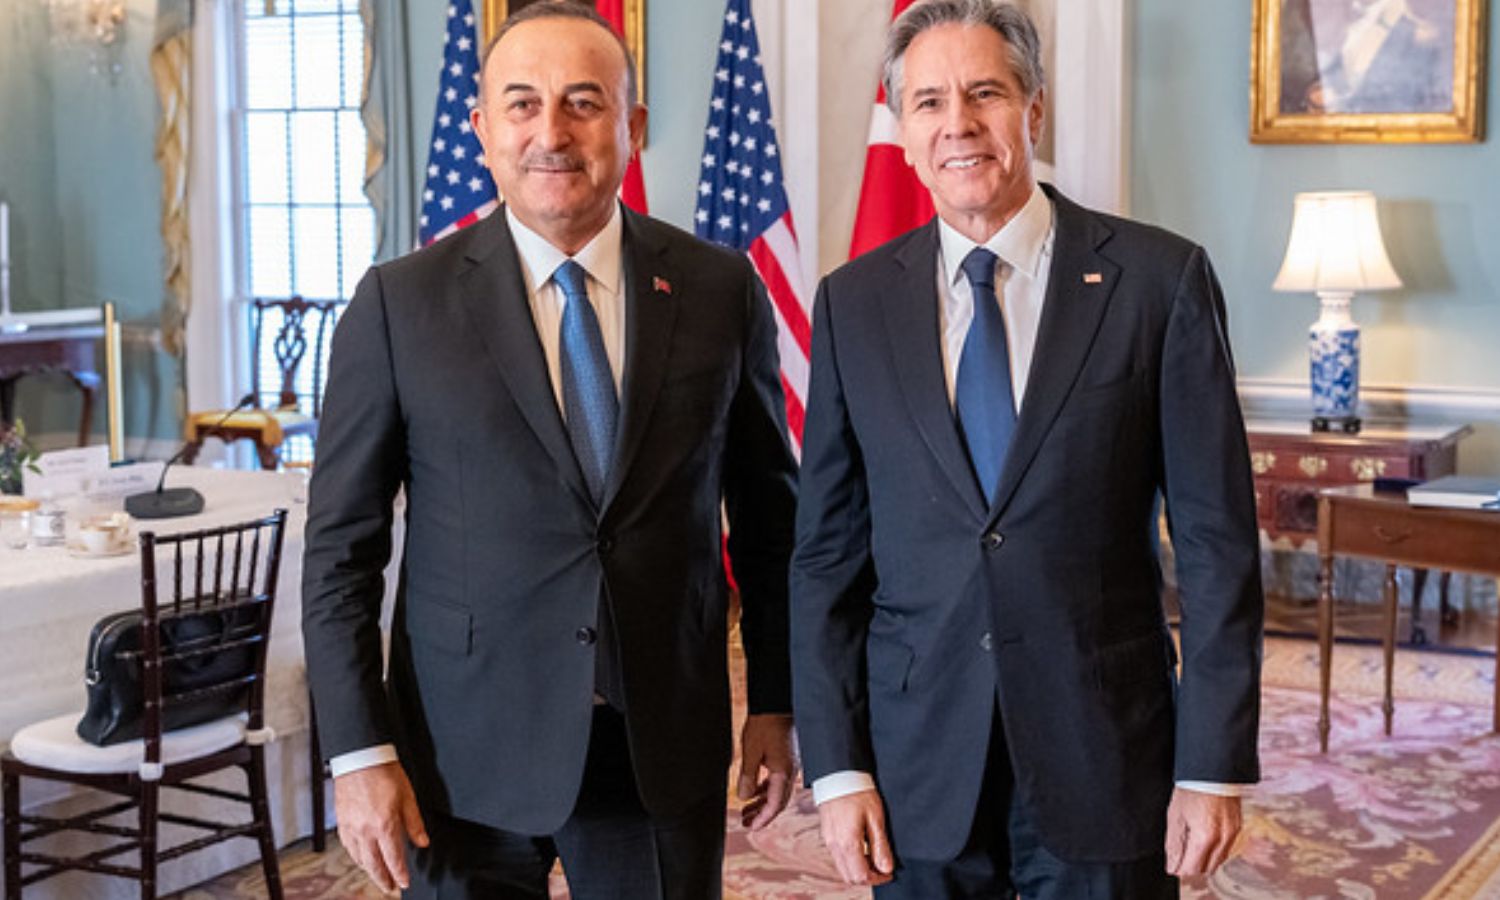 Turkish Foreign Minister Mevlut Cavusoglu meets his counterpart Antony Blinken in the United States - 18 January (Blinken’s Twitter account)